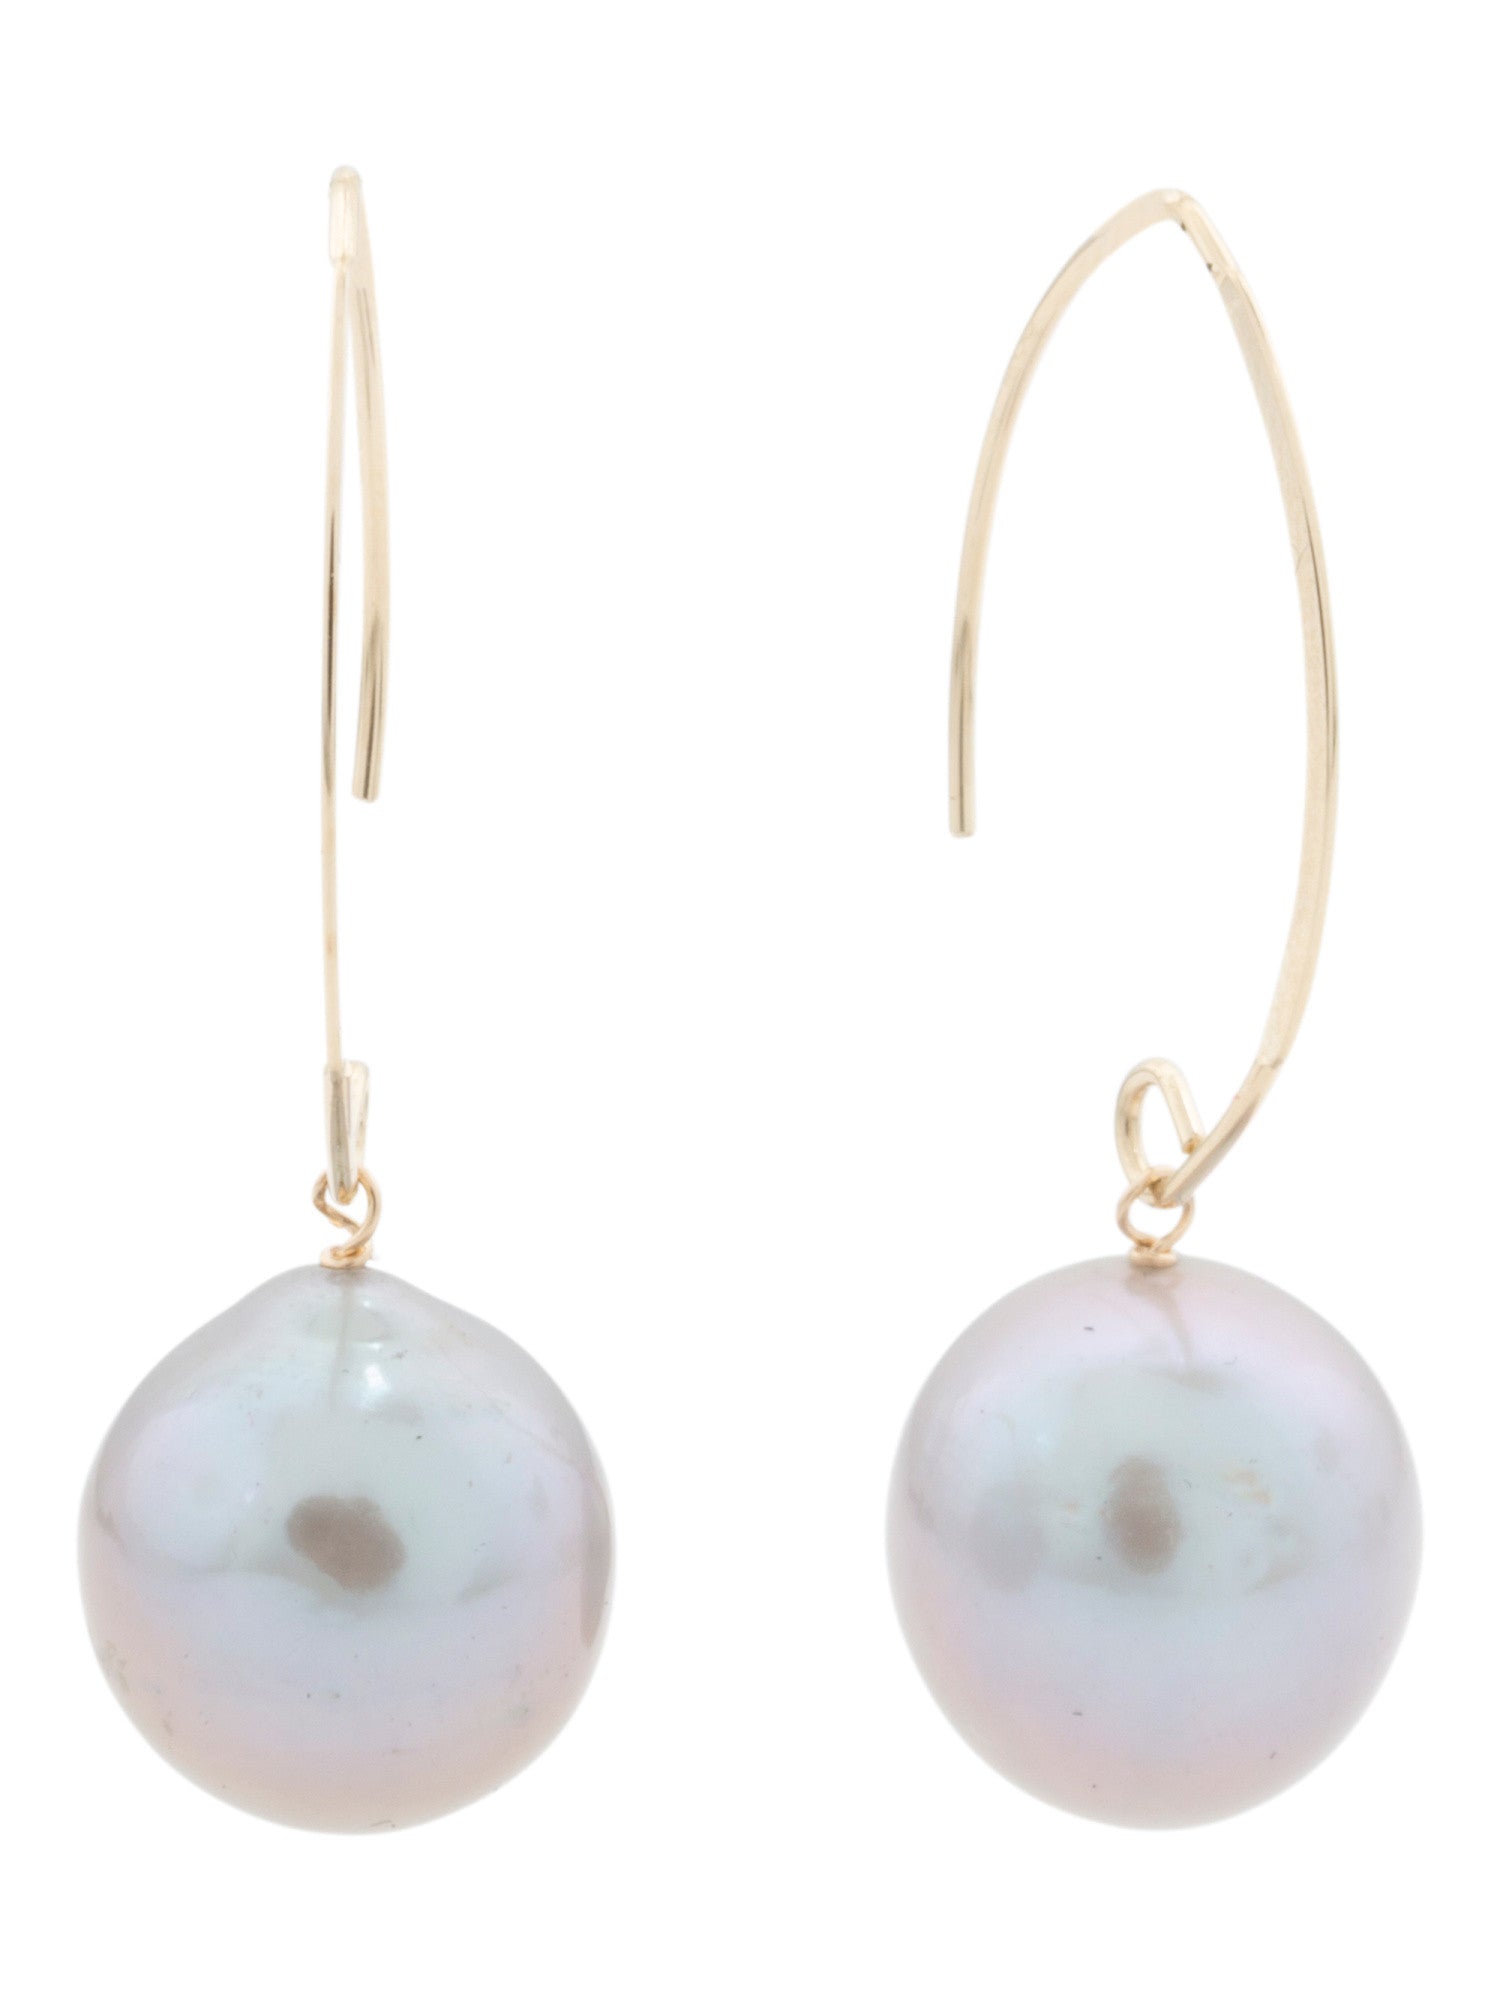 pearl earrings - jewelry - by owner - sale - craigslist